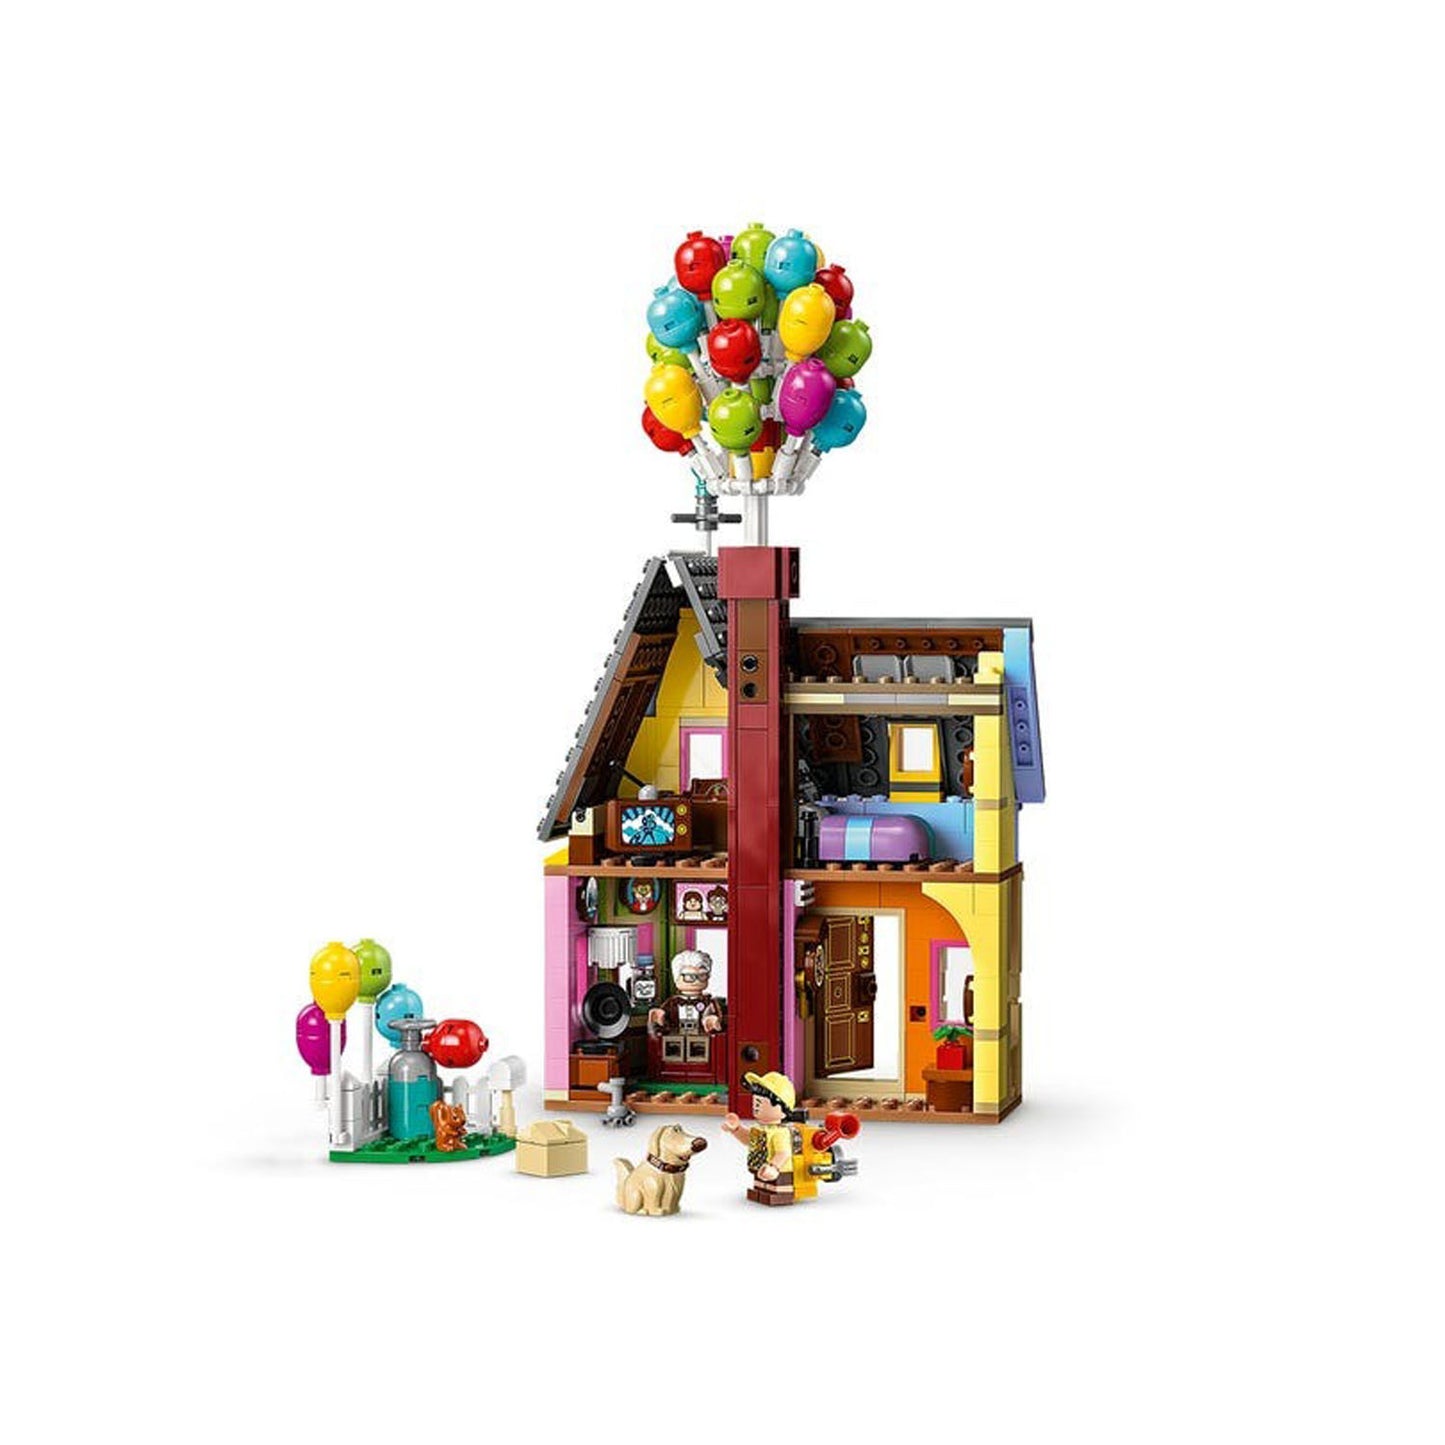 Lego Disney Casa De Up 43217 - Crazygames